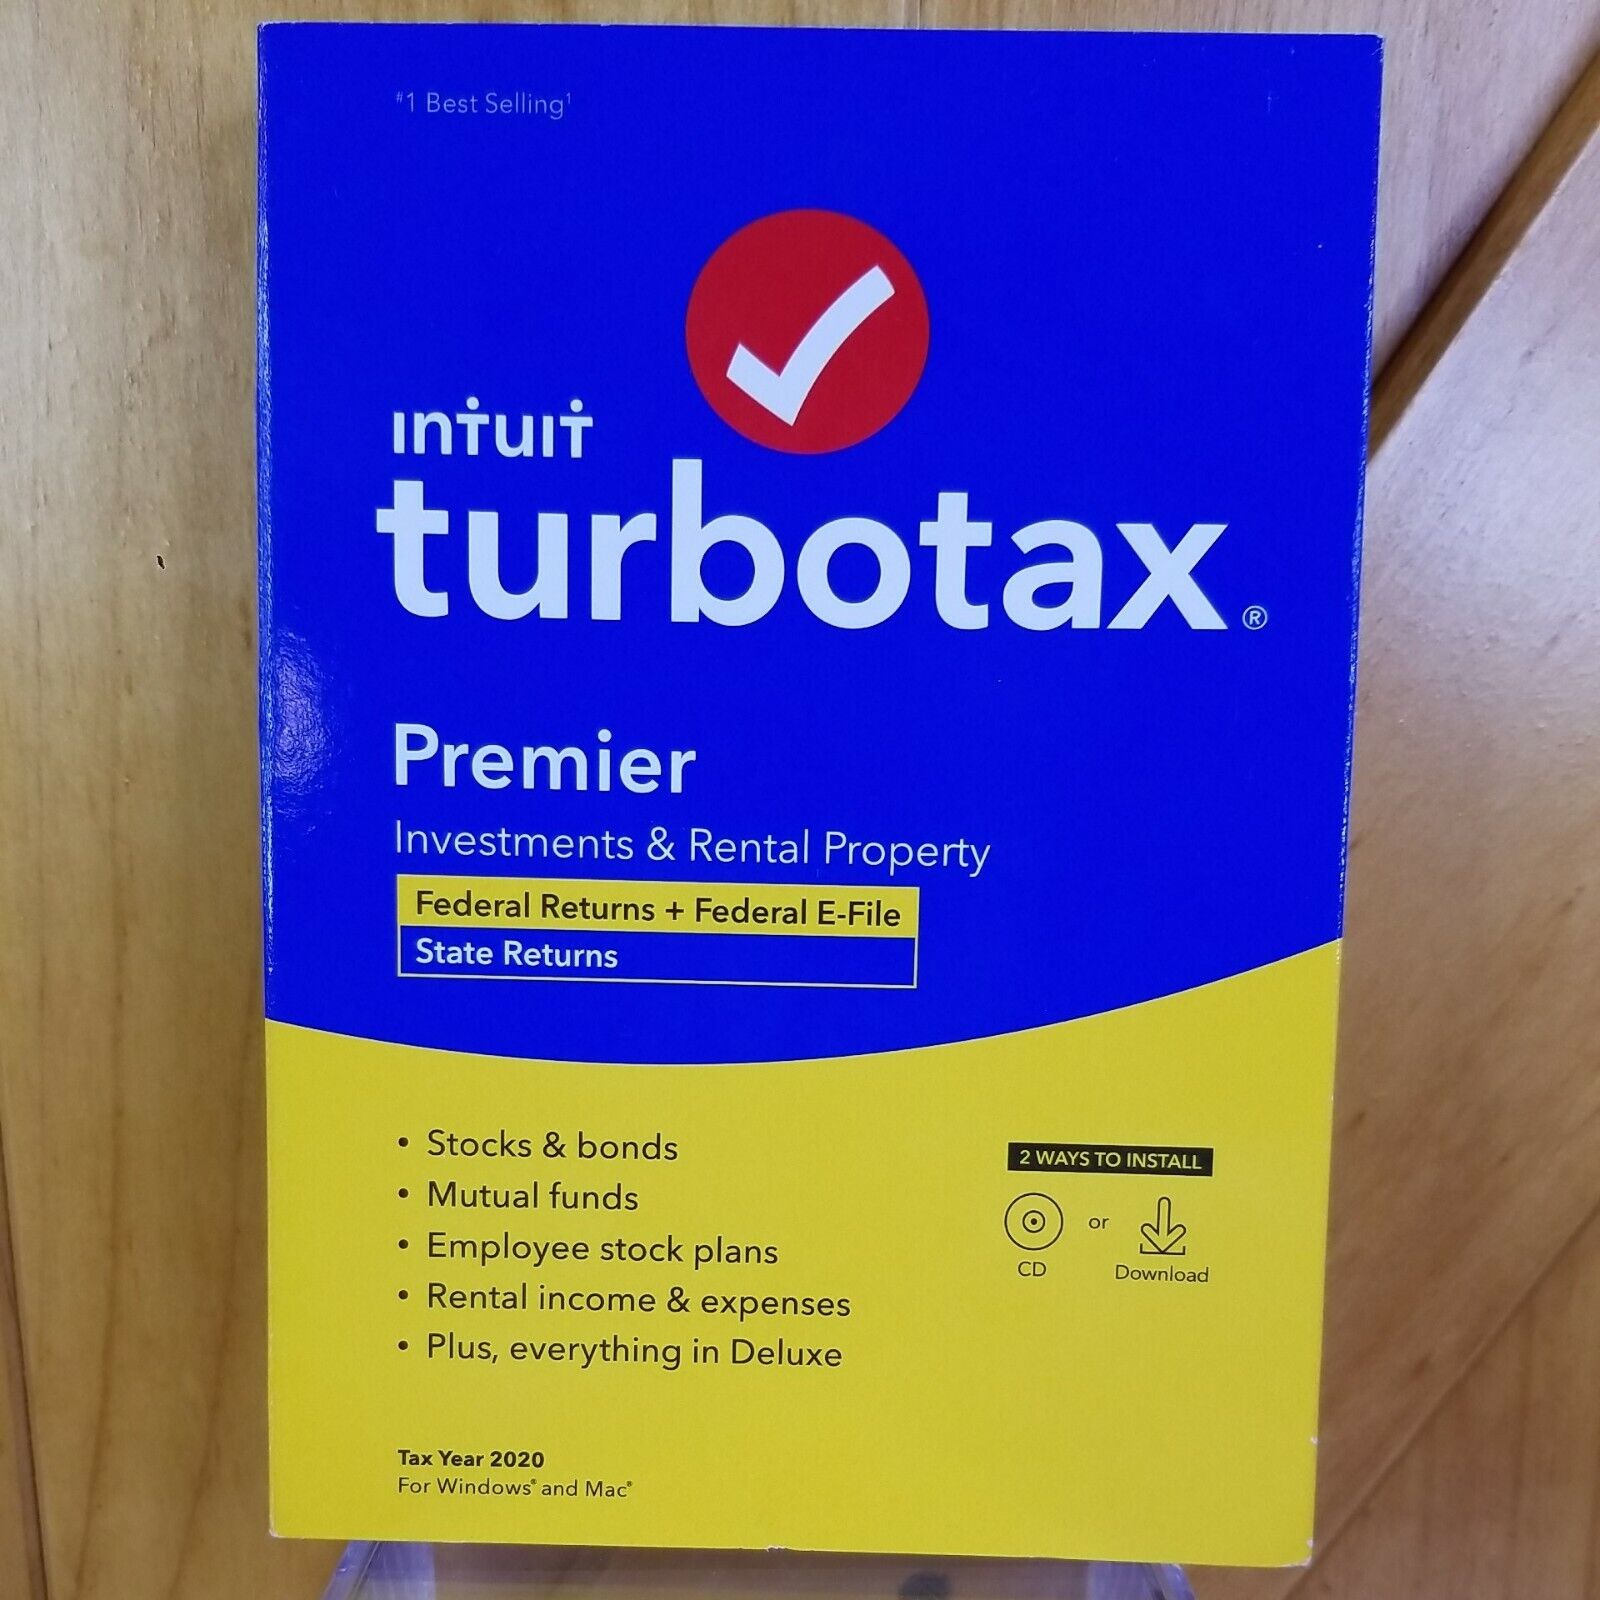 TurboTax Premier 2020 Tax Software, Federal Returns + E-File